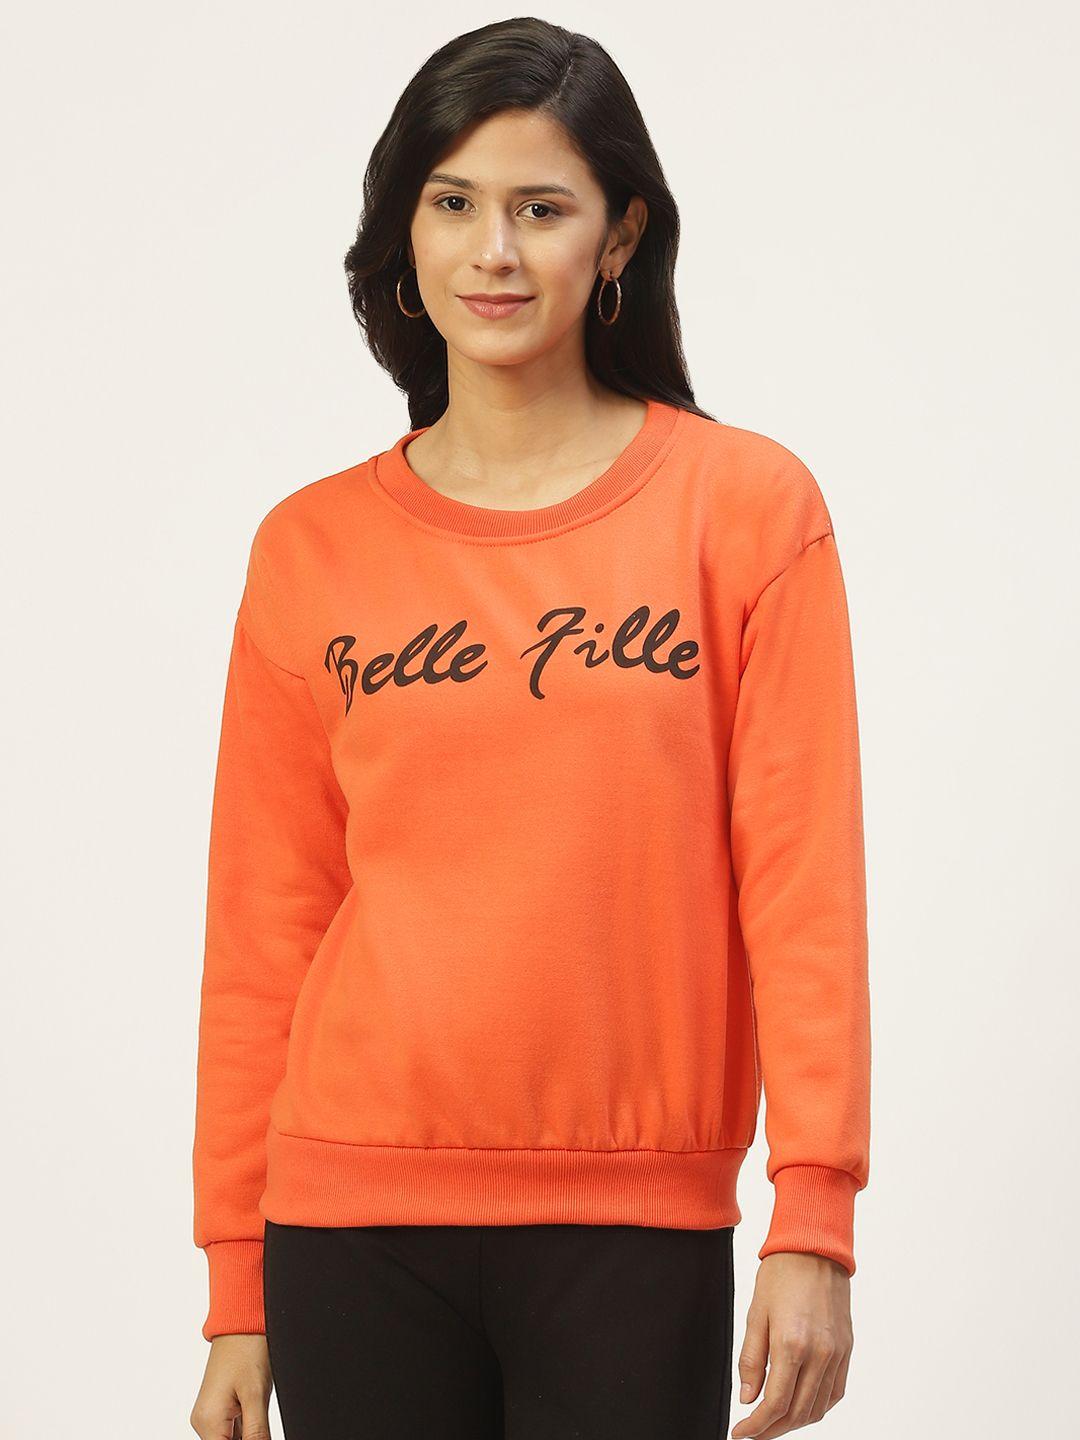 belle fille women orange printed sweatshirt